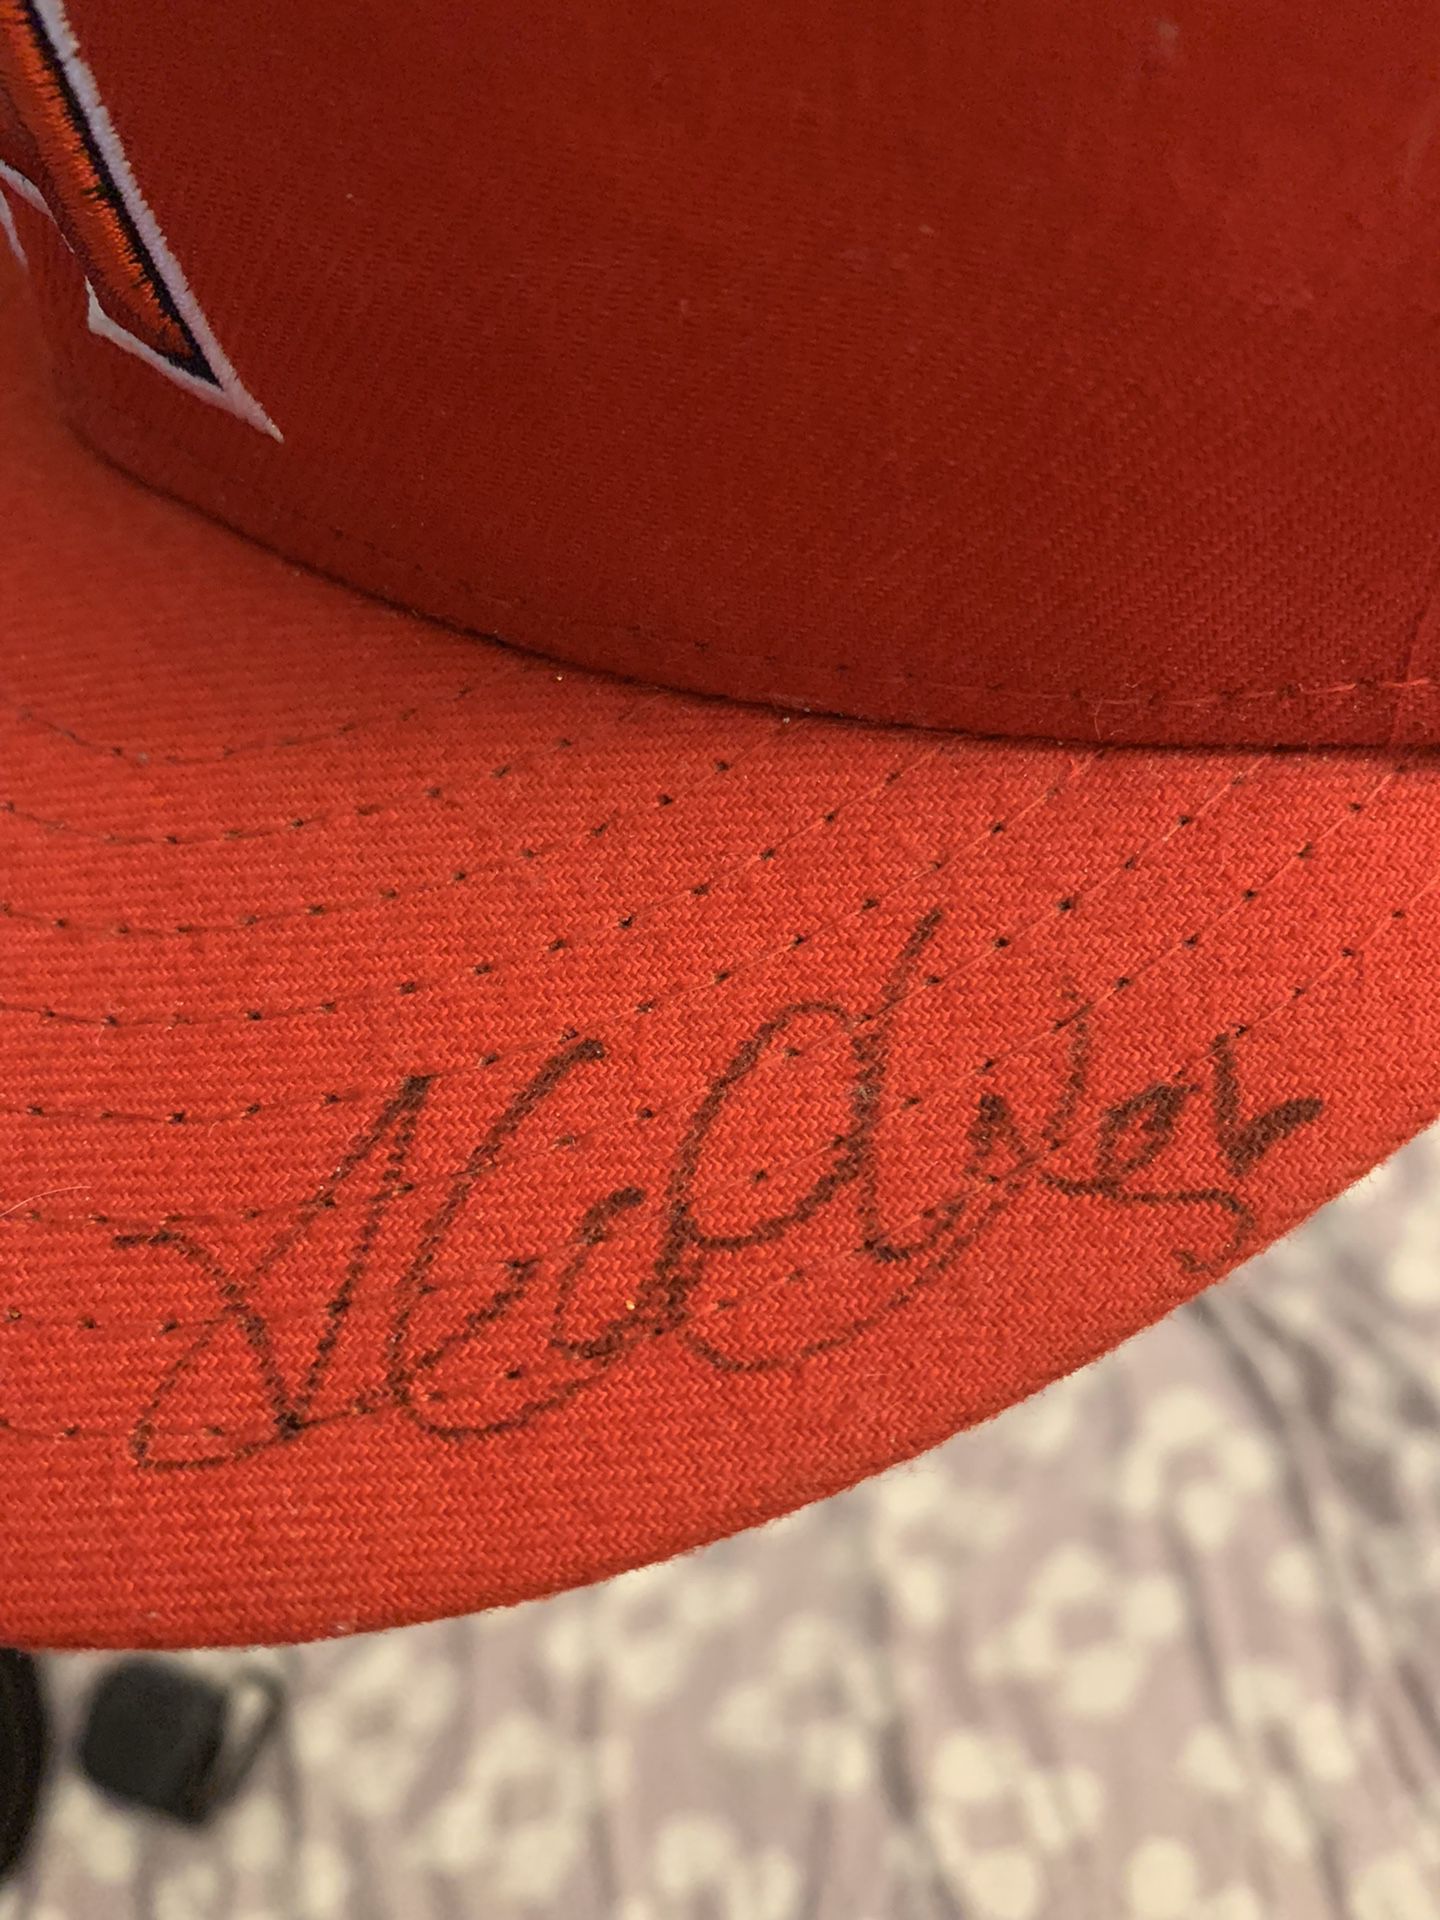 Angels Kole Calhoun signed hat